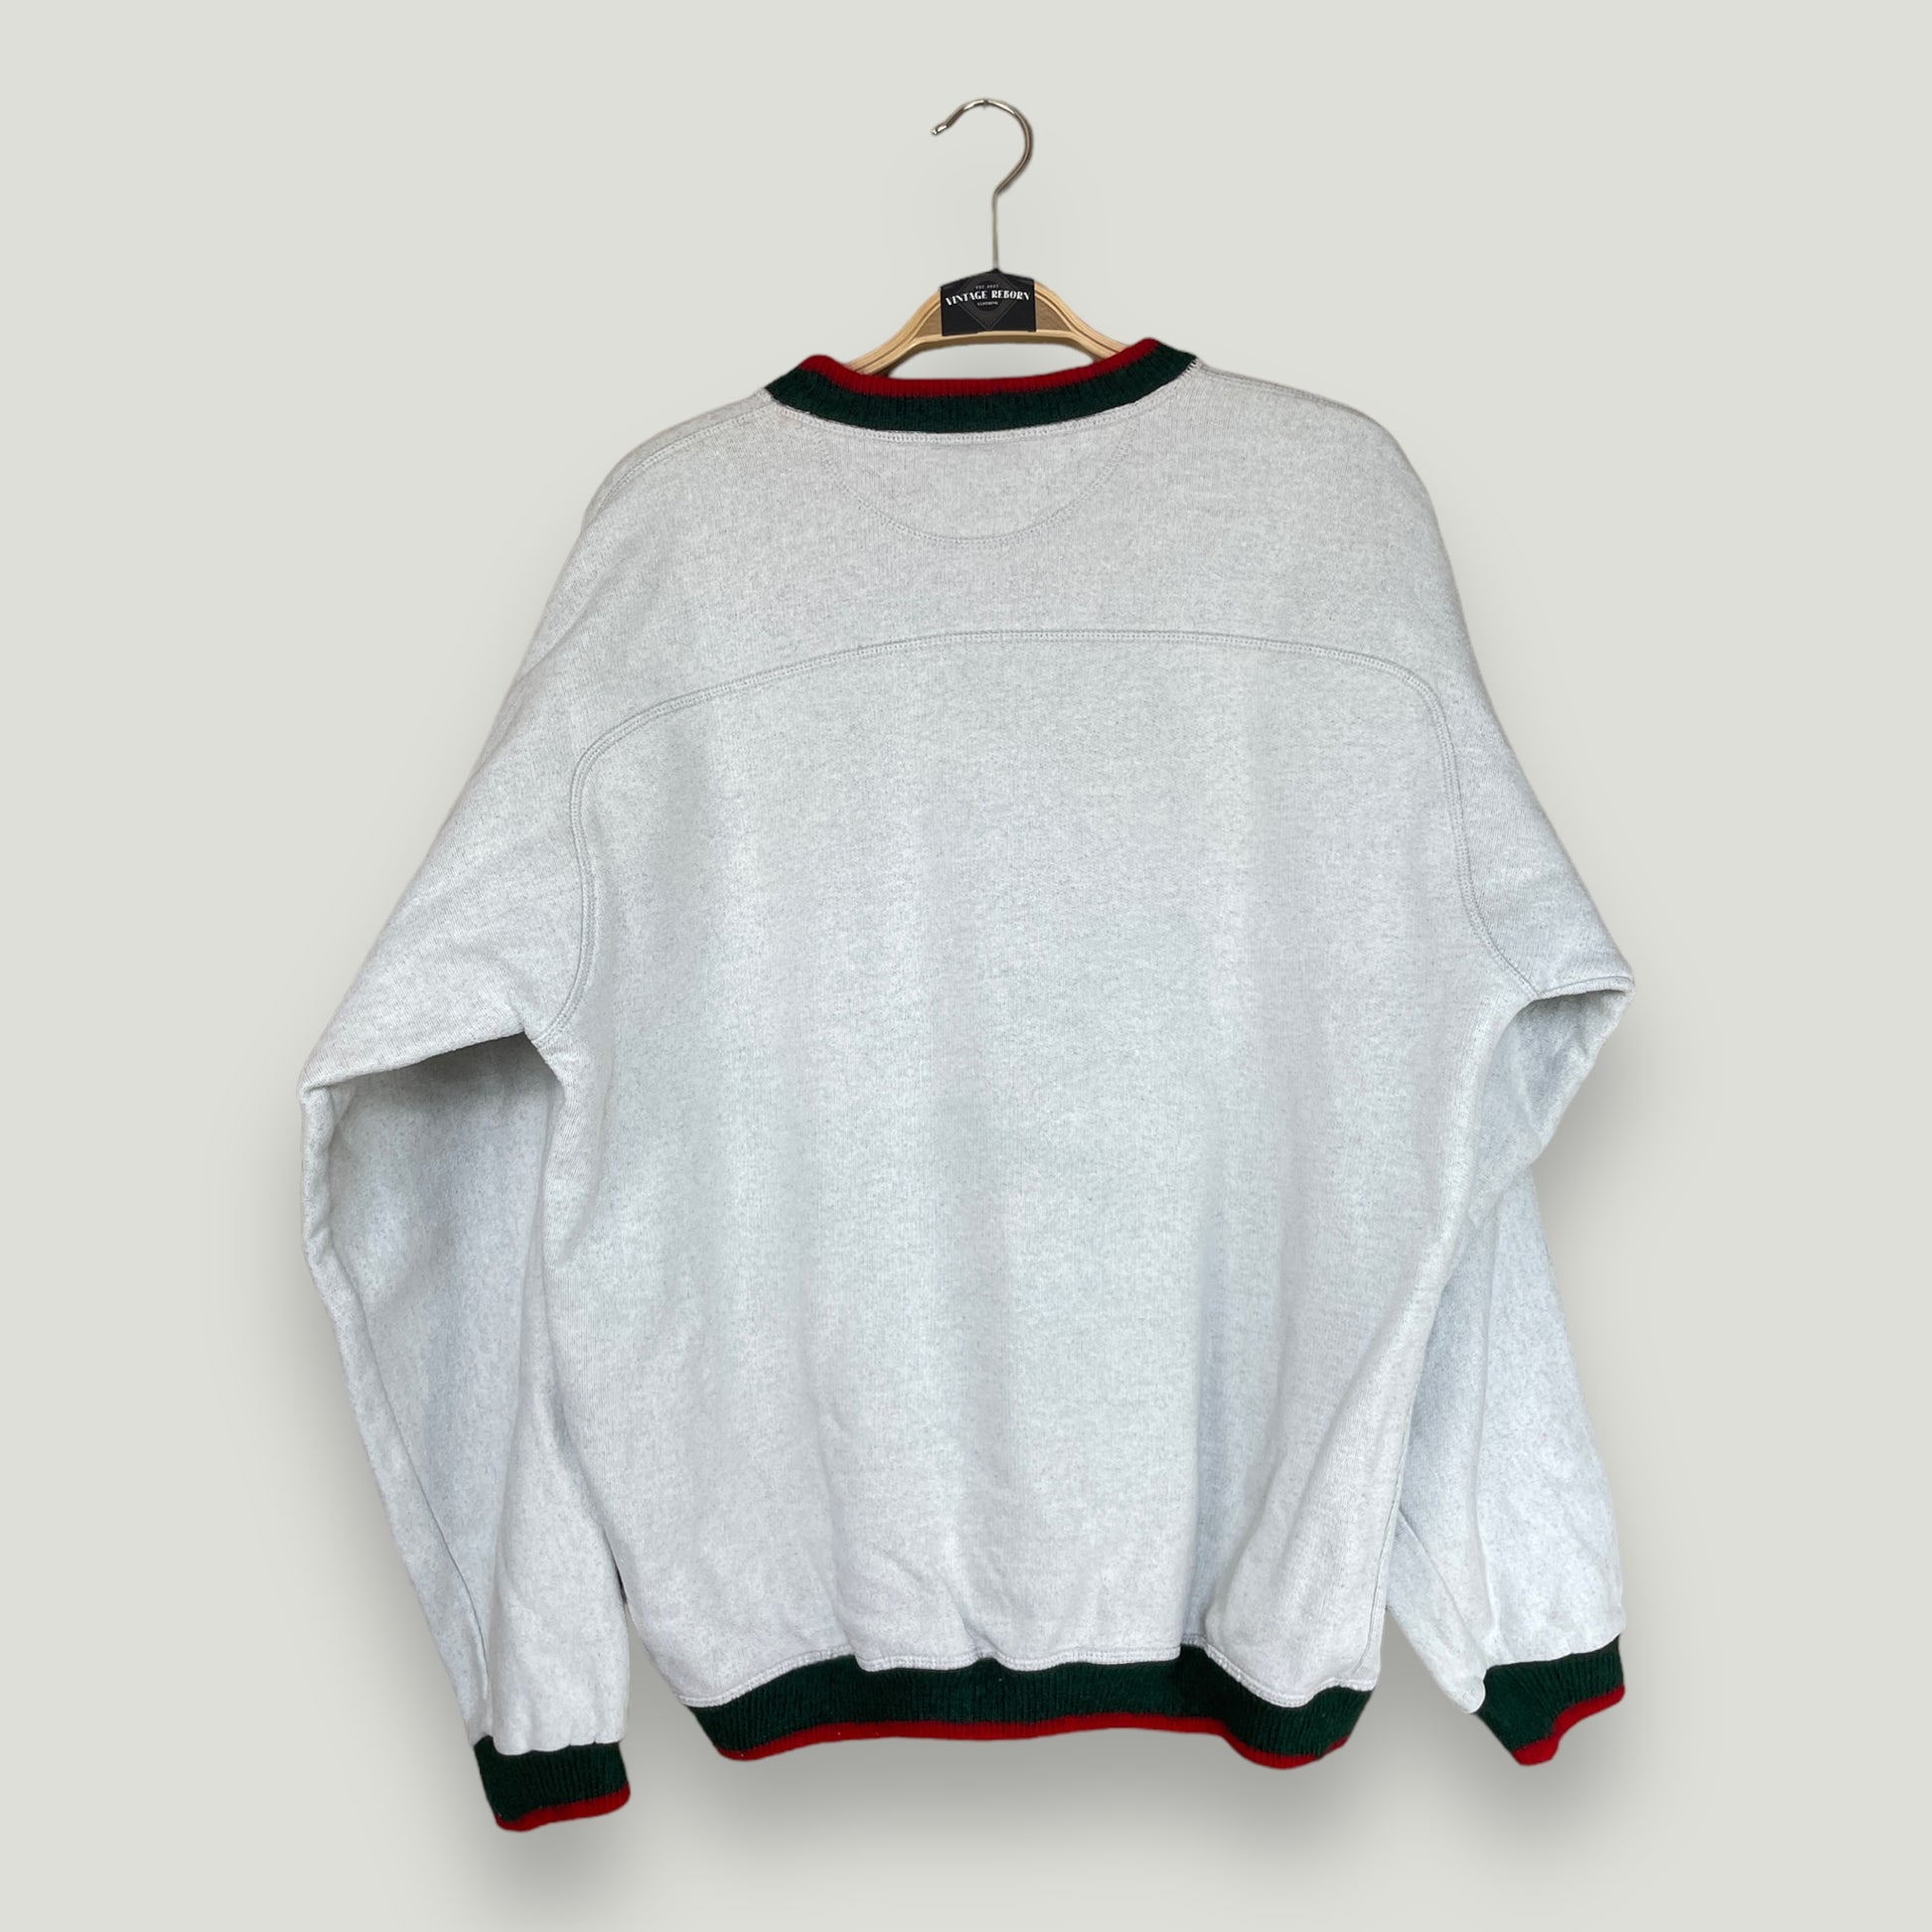 Hockey Vintage Sweater - Vintage Reborn